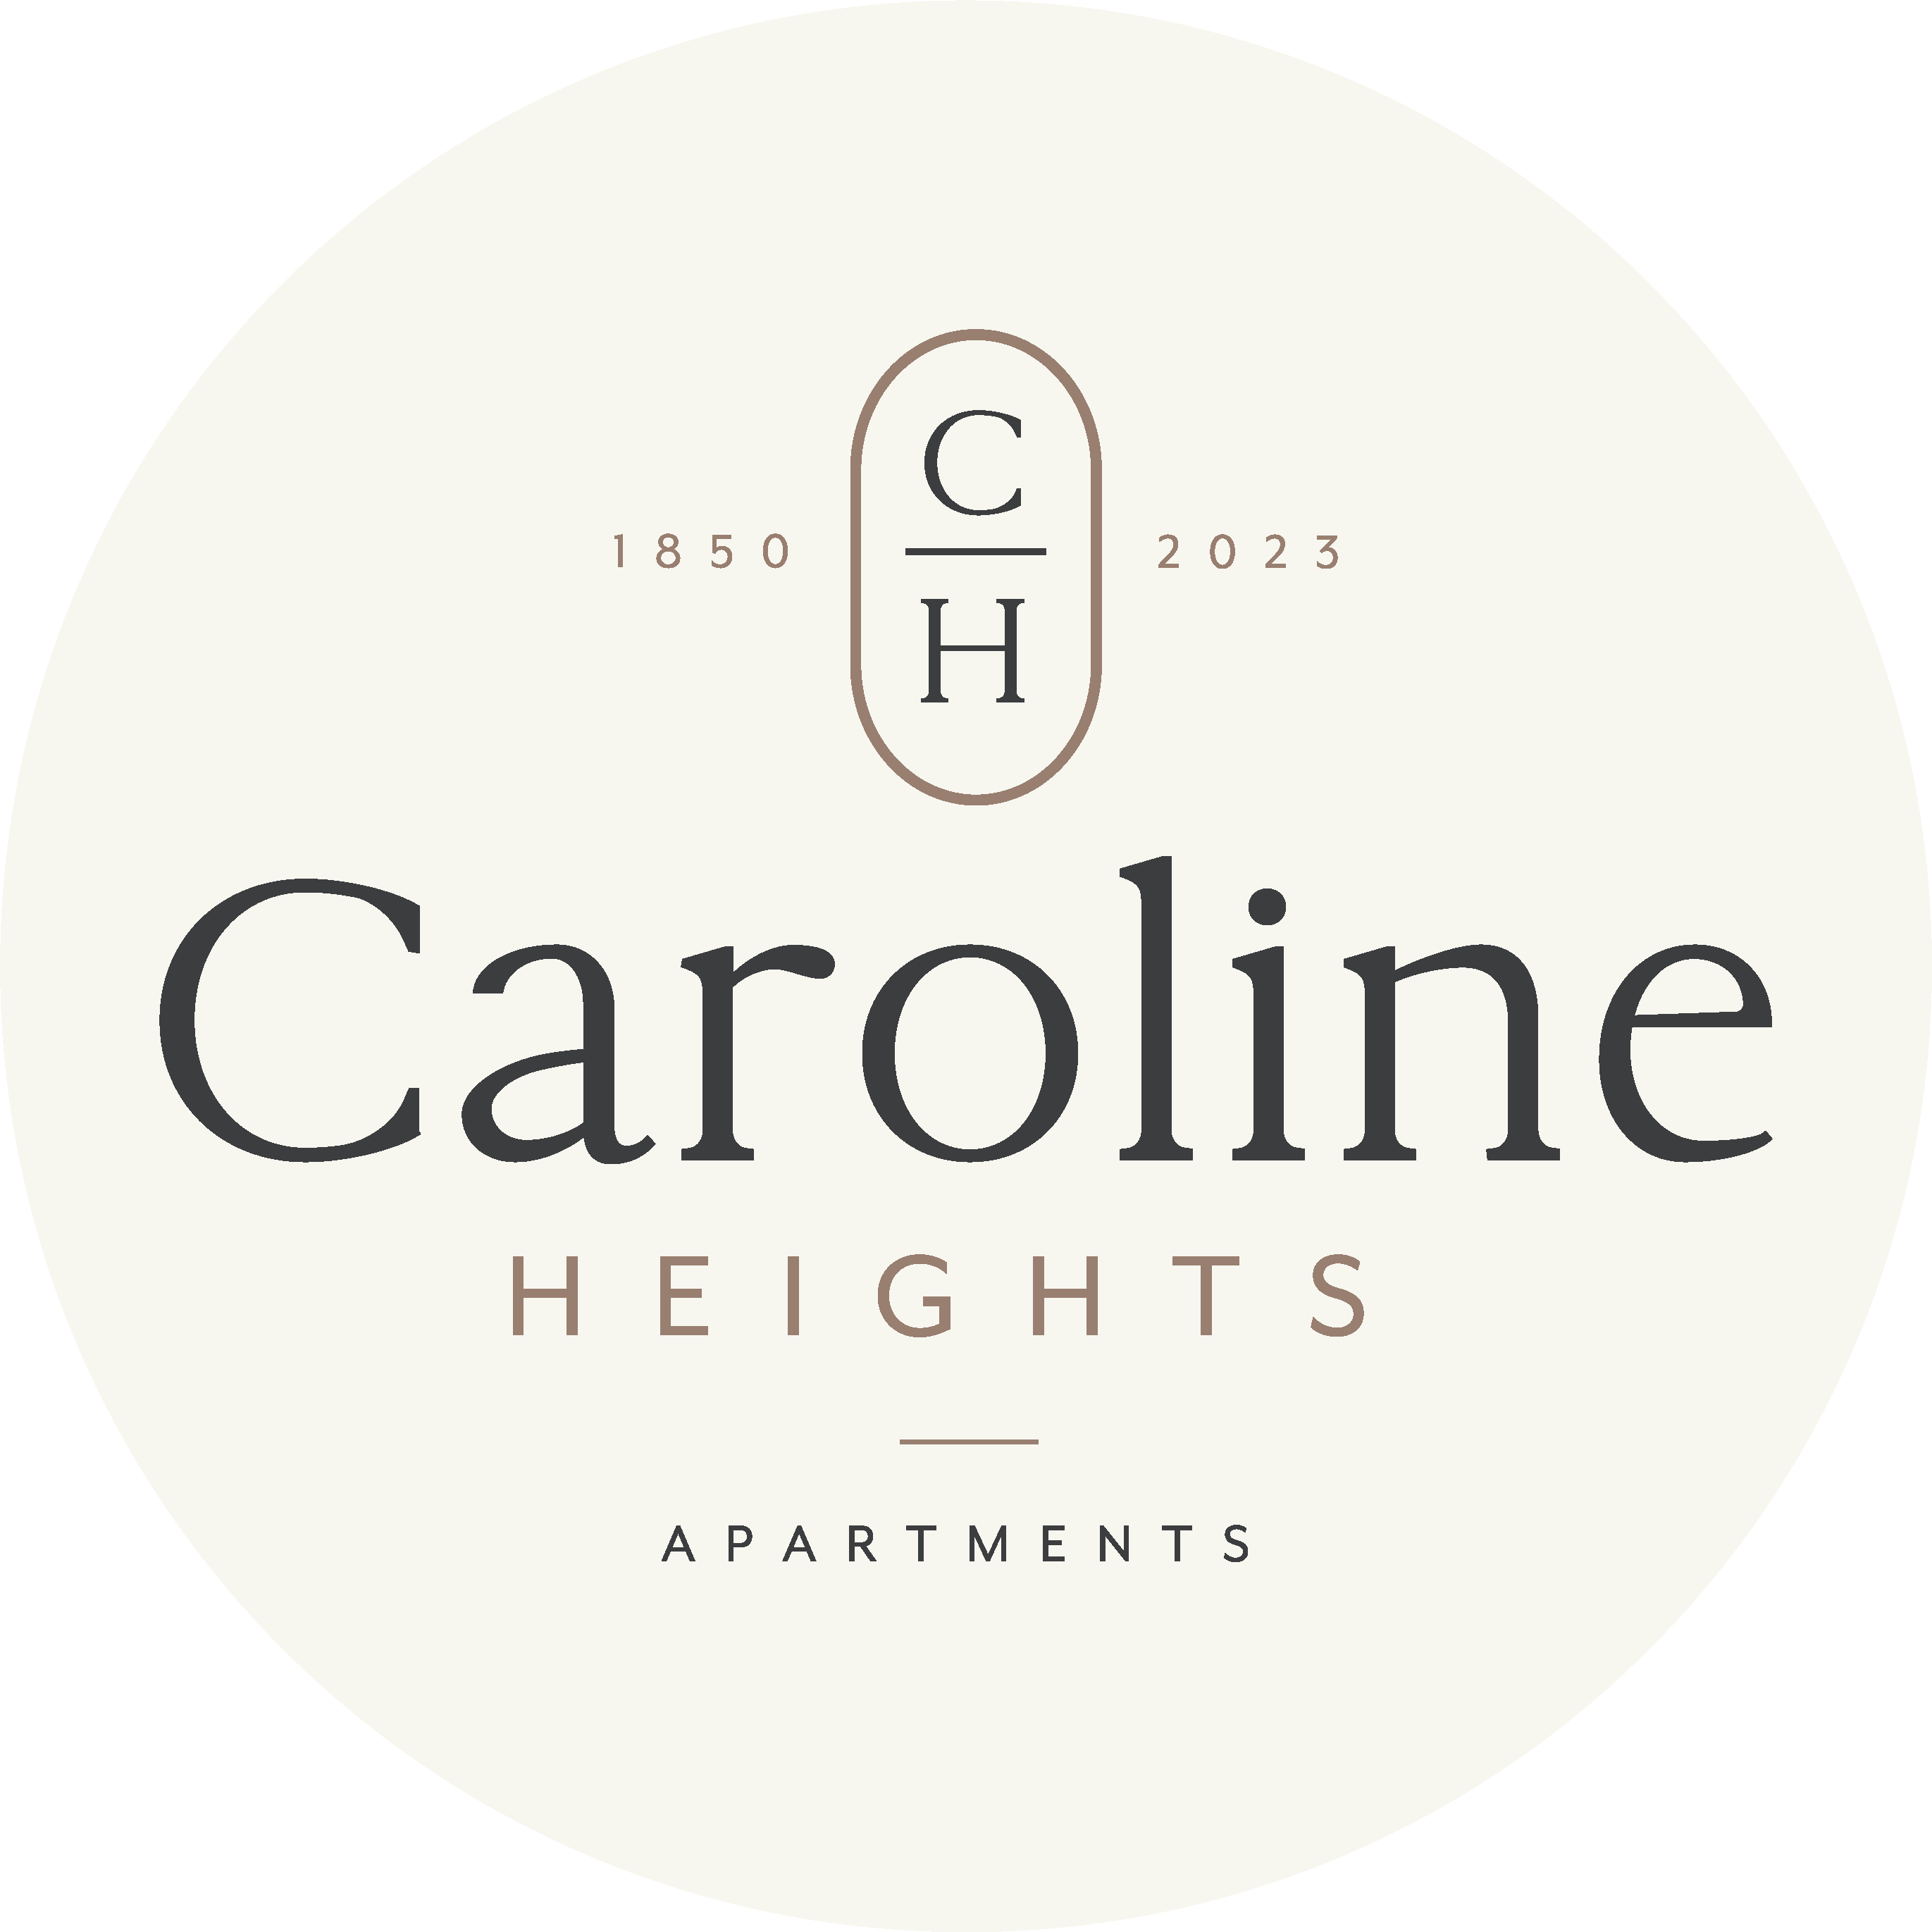 Caroline Heights logo